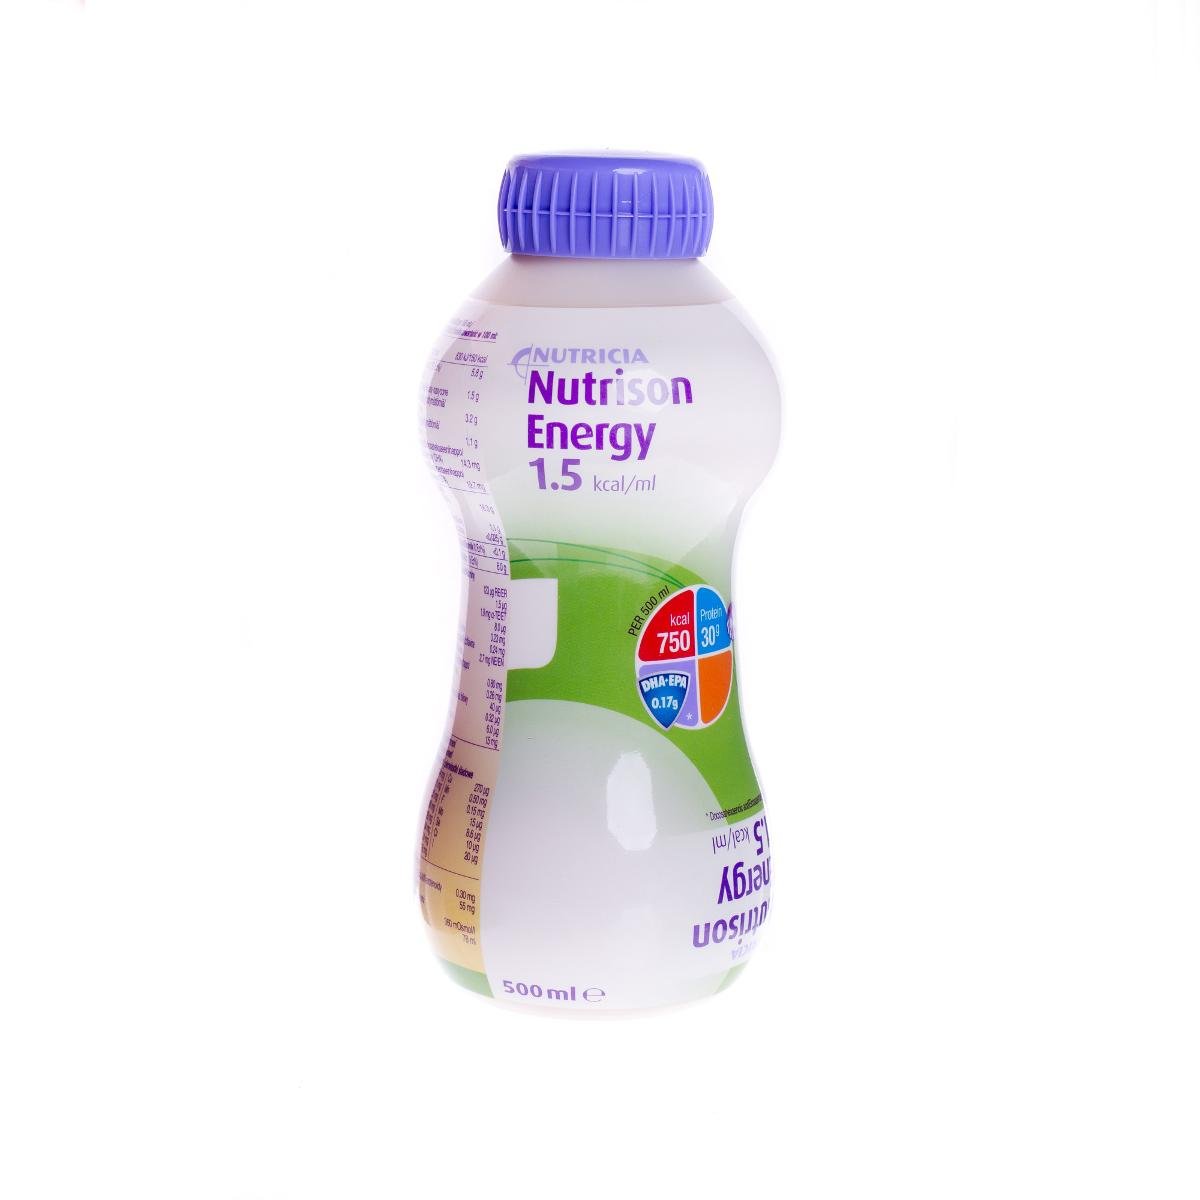 Nutricia Nutrison energy 500 ml butelka plastikowa